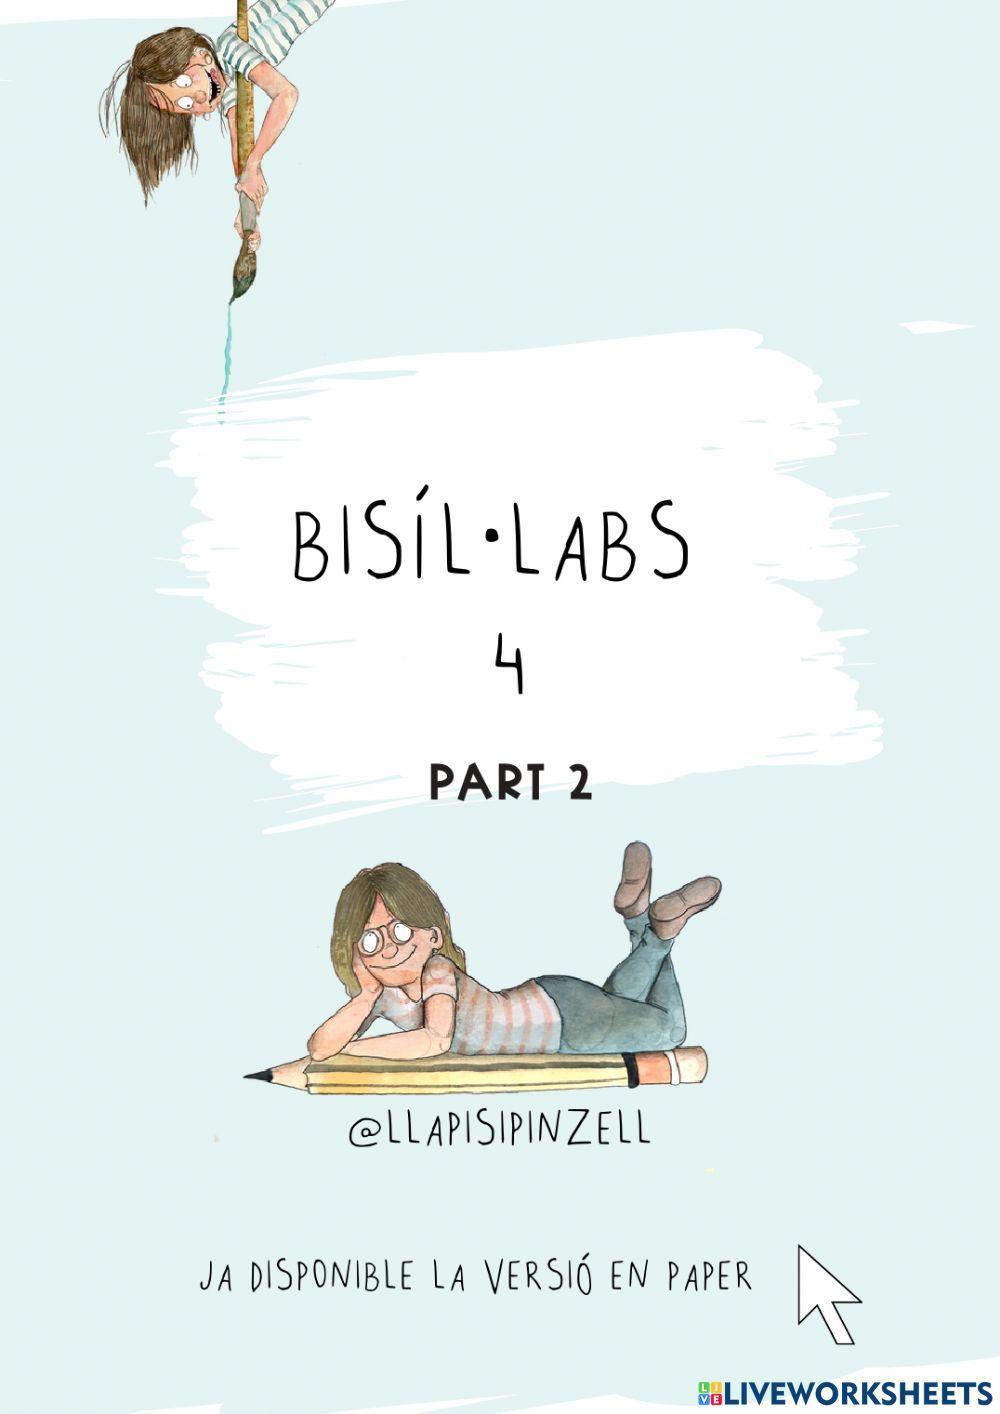 Bisíl·labs 4 part 2